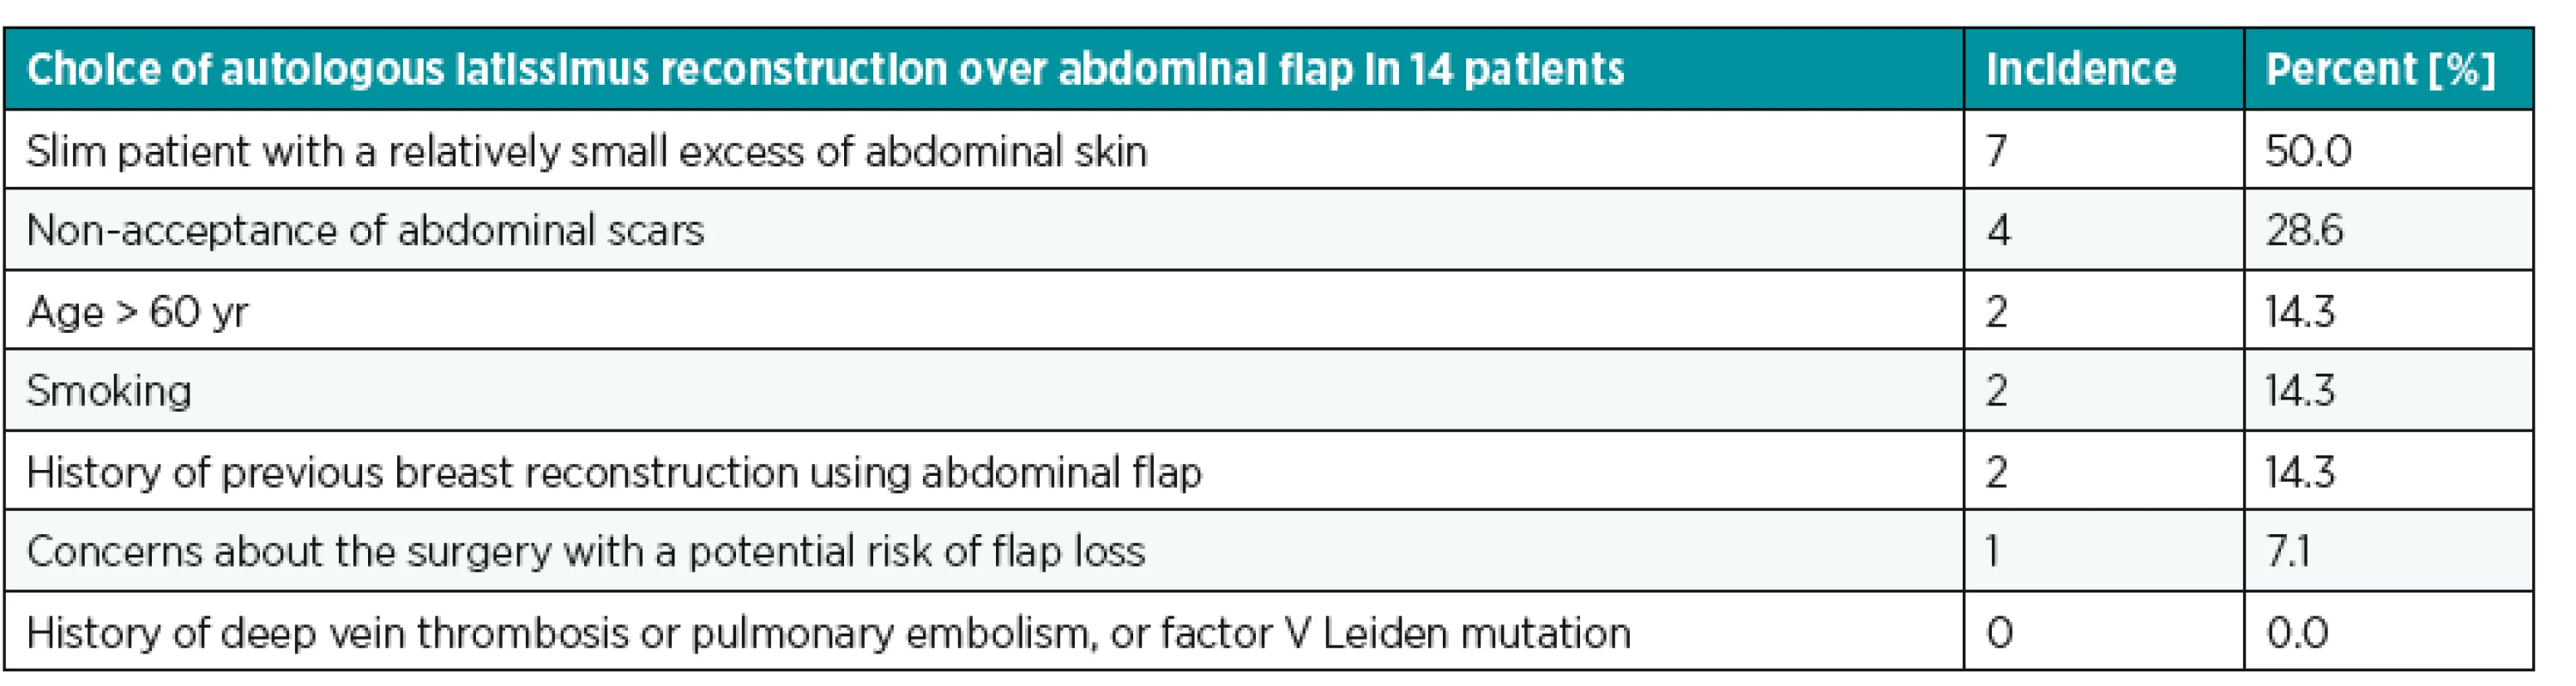 Choice of autologous latissimus reconstruction over abdominal flap